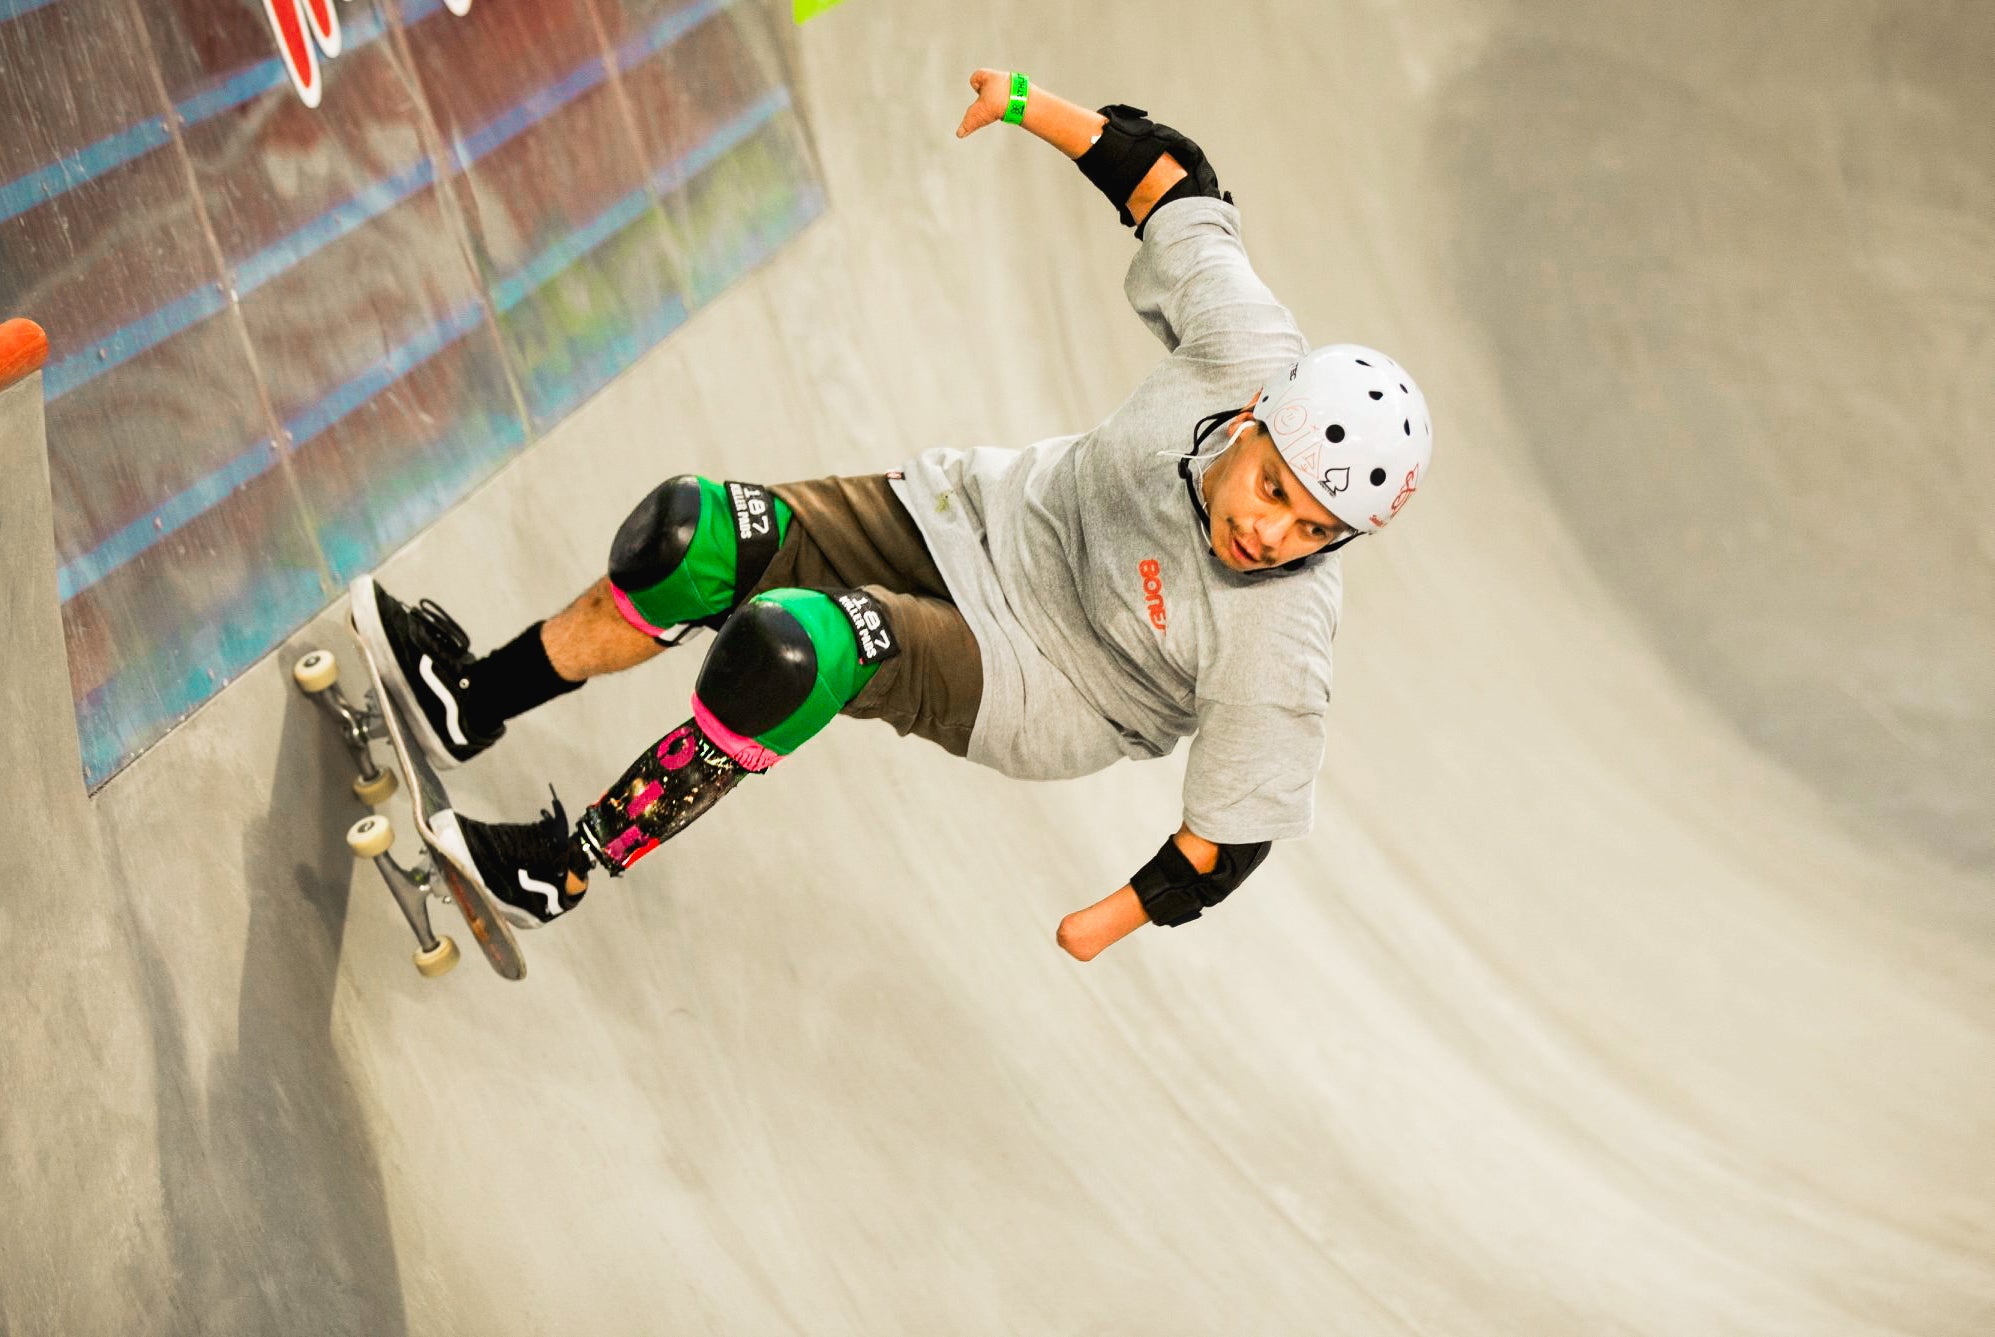 Team Amplife® Ambassador Oscar Loreto, Jr. riding down a bowl on his skateboard in a skate competition